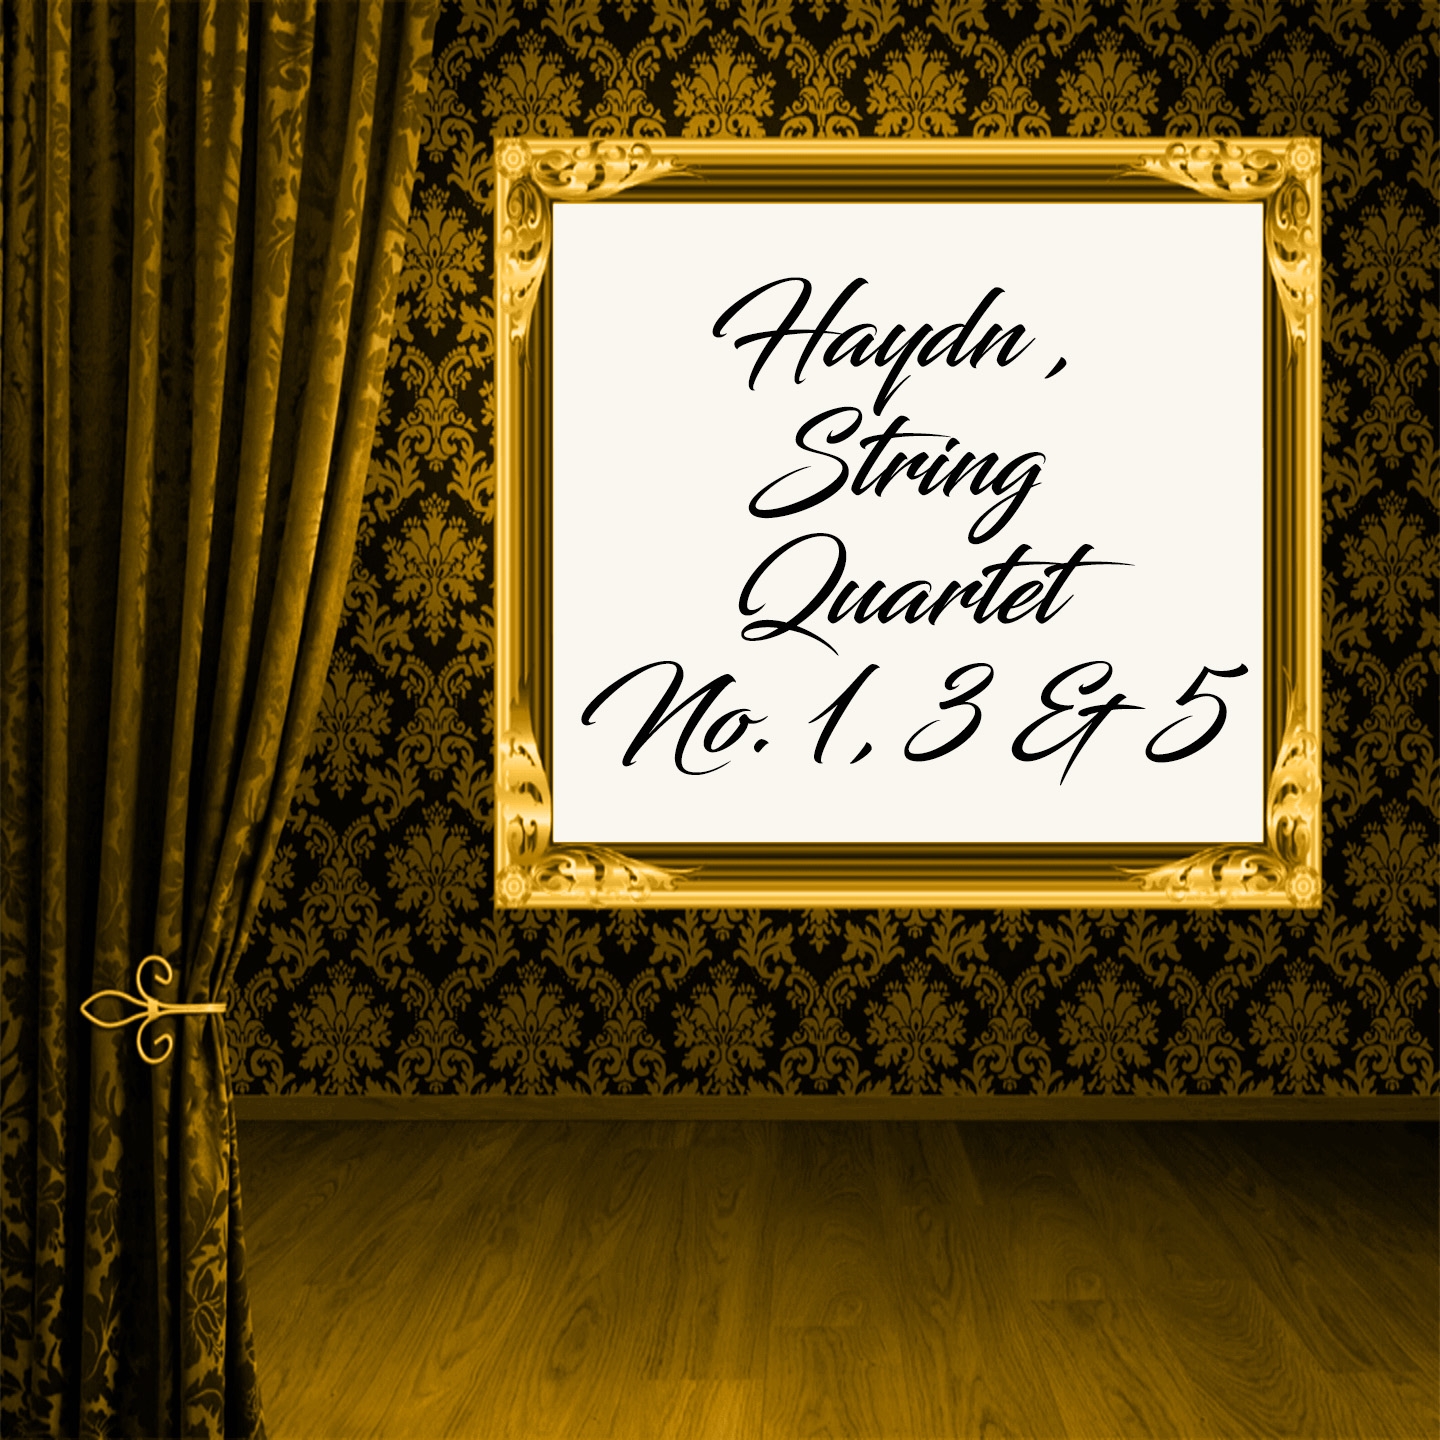 Haydn: String Quartets Nos. 1, 3 & 5